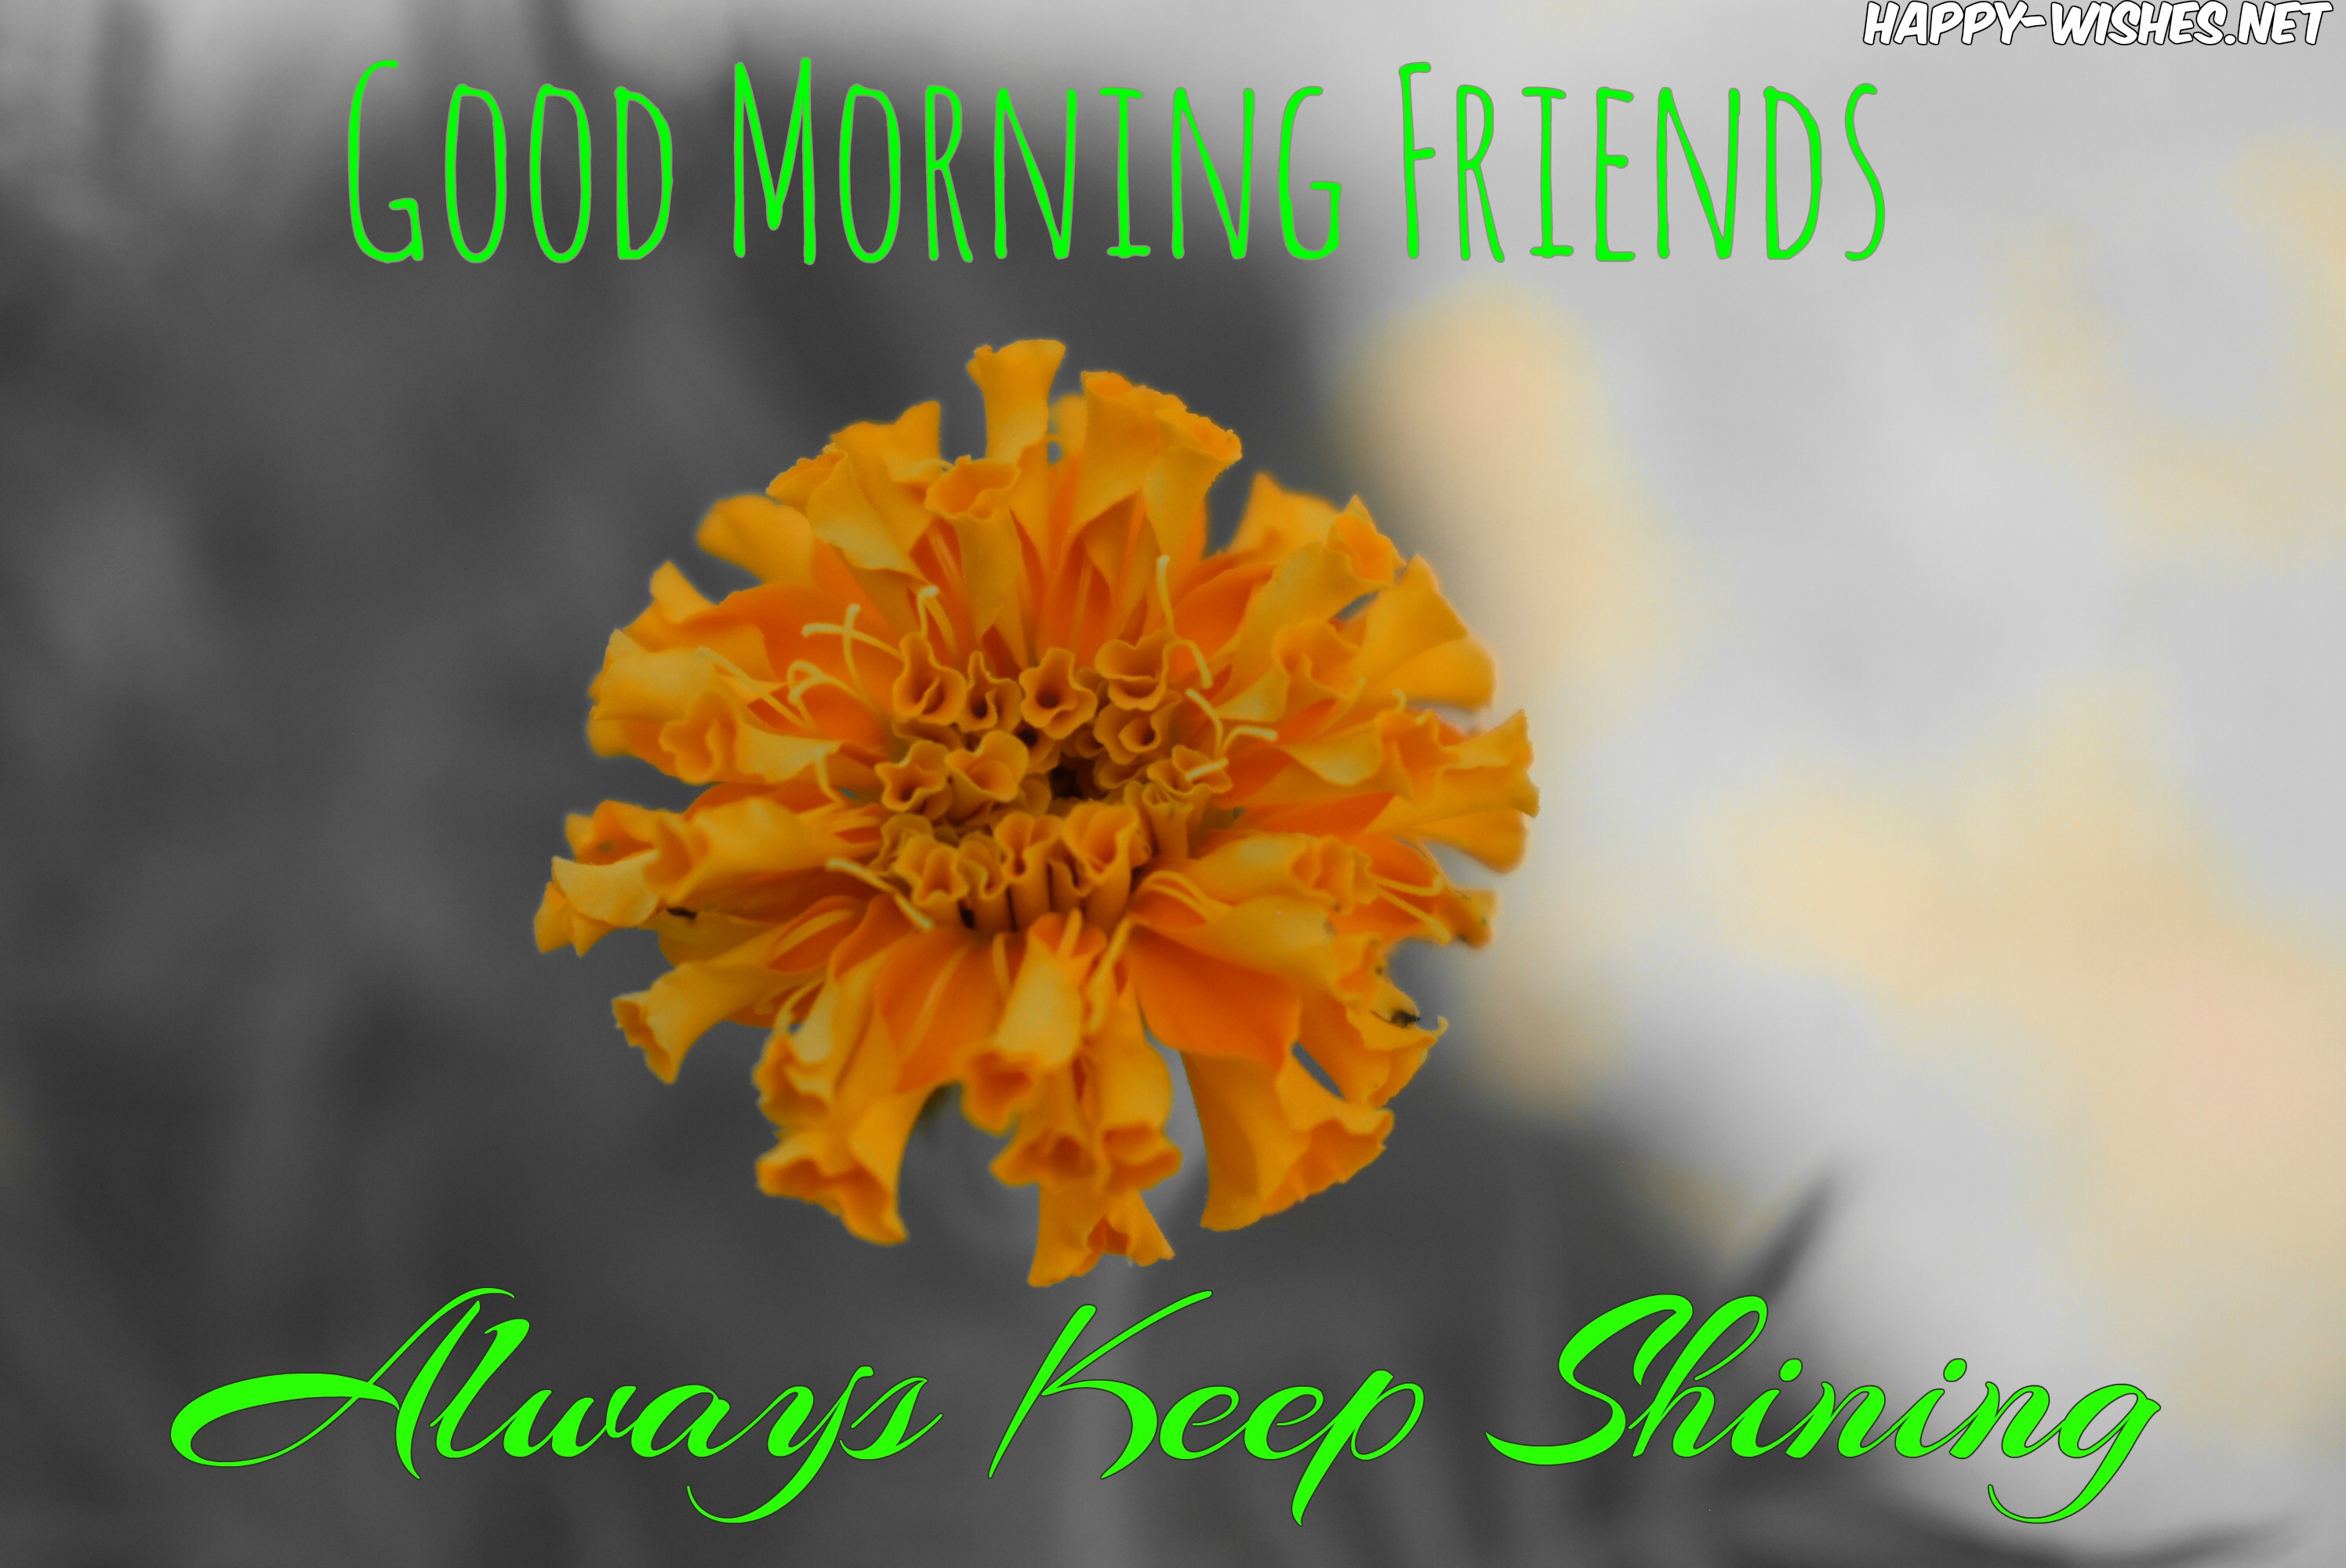 Good morning friends always keep shining